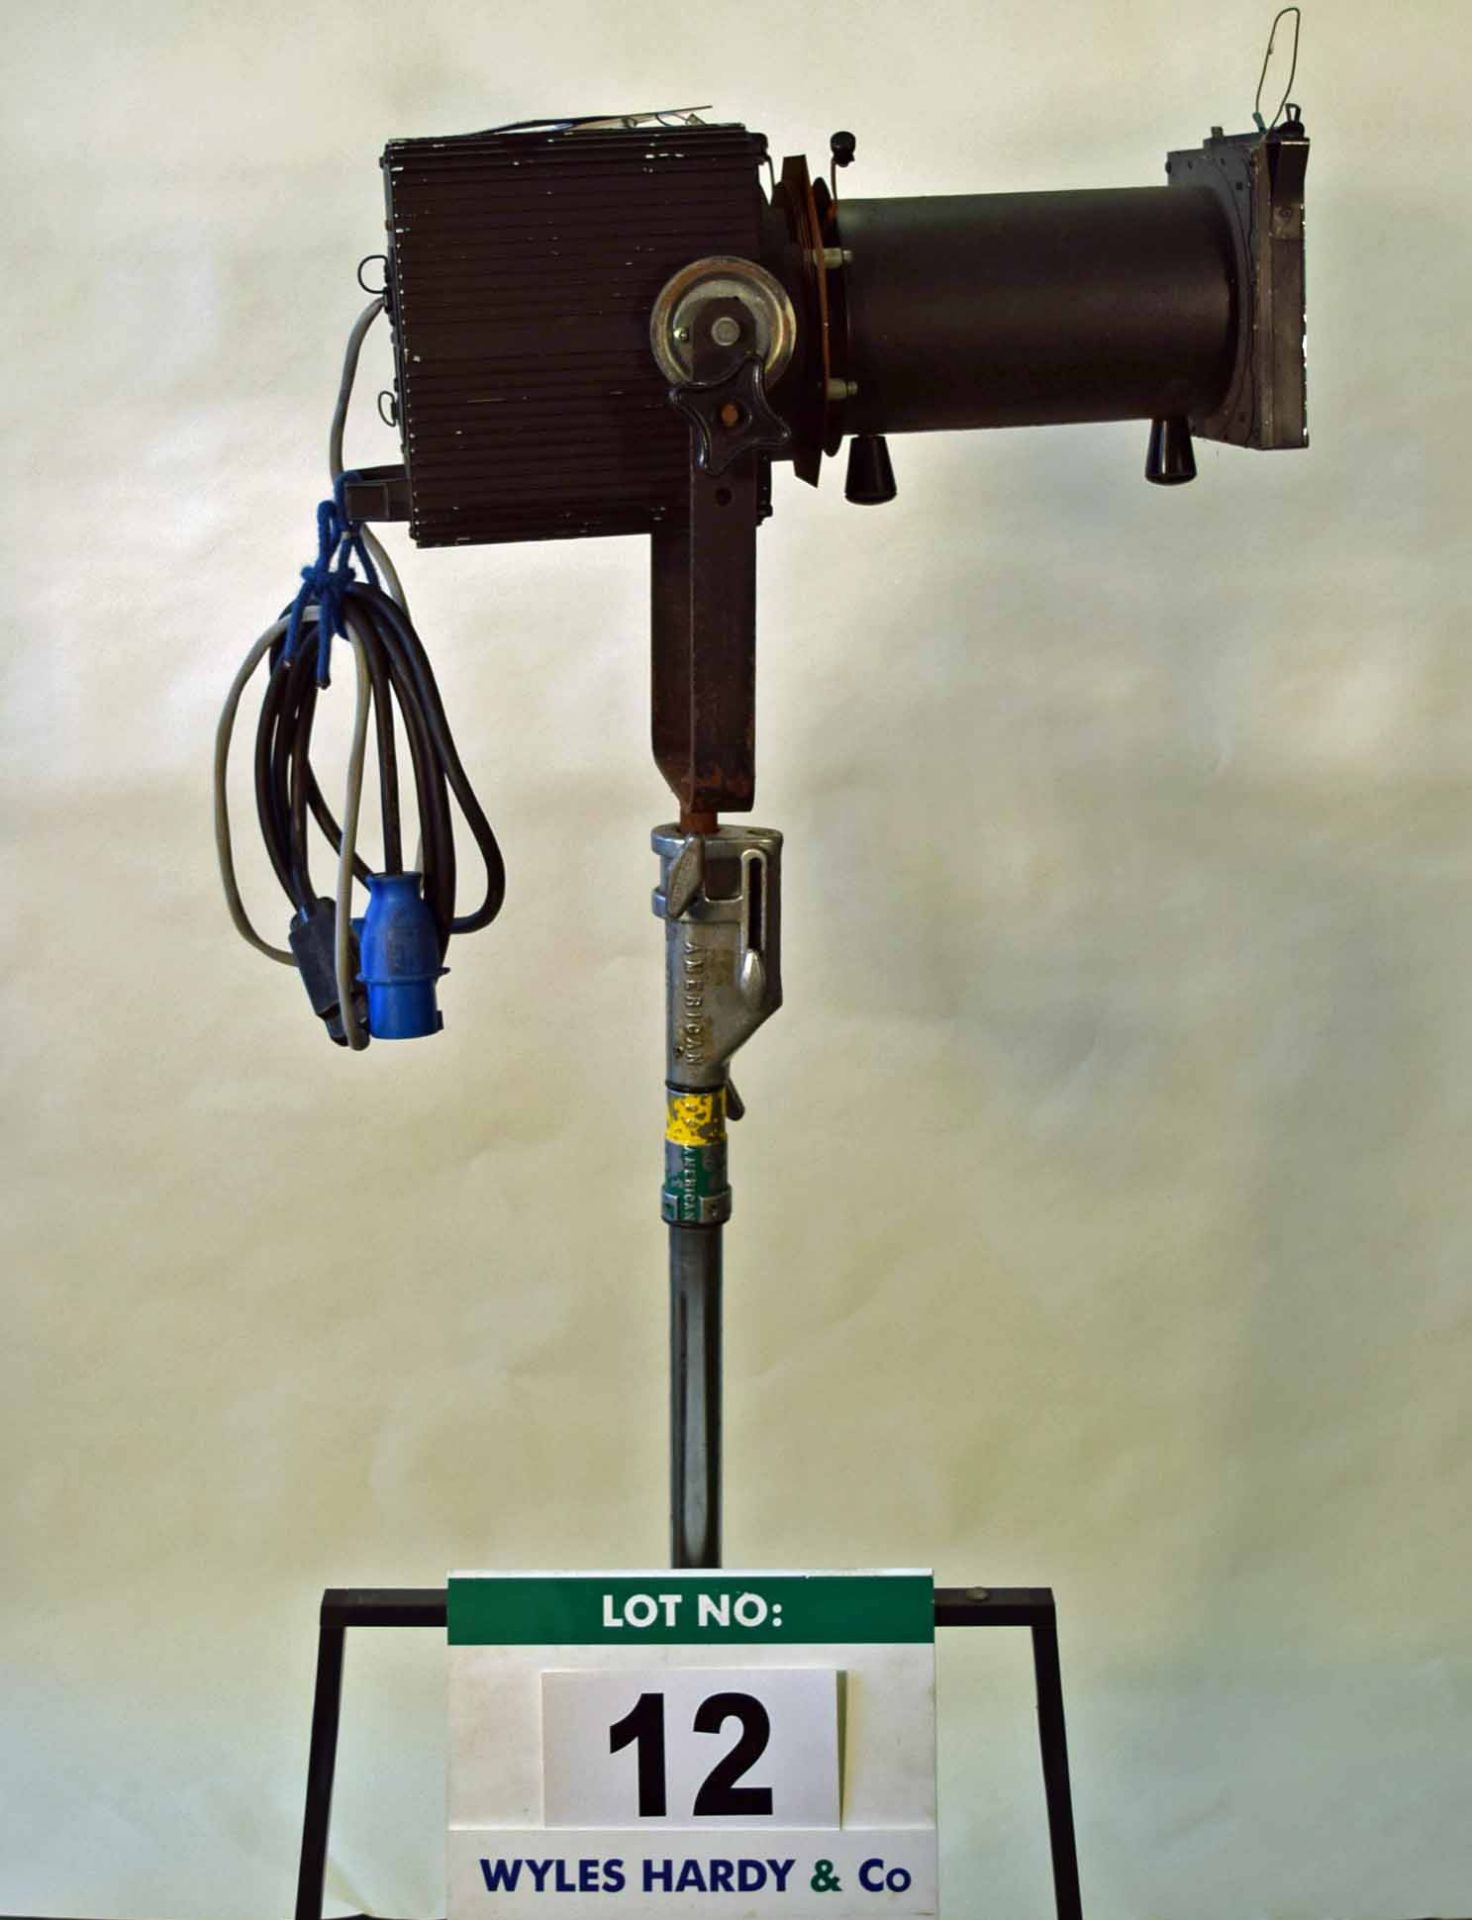 A CCT Silhouette 1000 Watt AXAIL Follow Spot Lantern with Manual IRIS, Colour Changer and Gobo